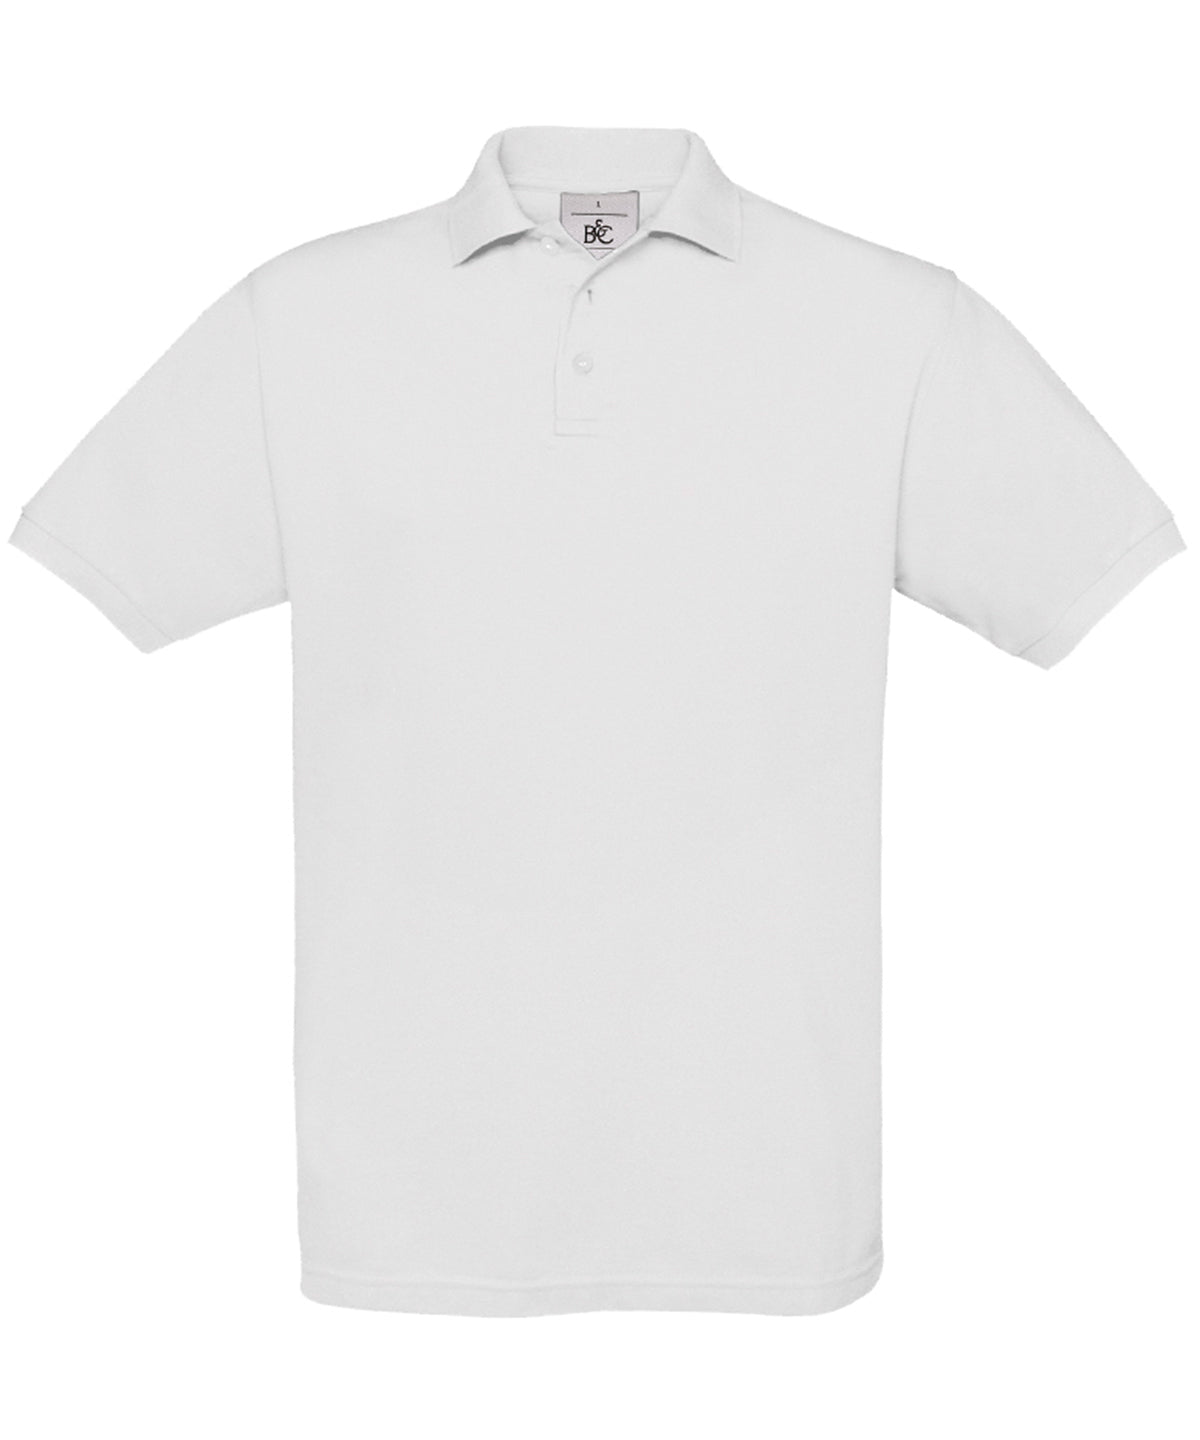 Personalised Polo Shirts - Black B&C Collection B&C Safran